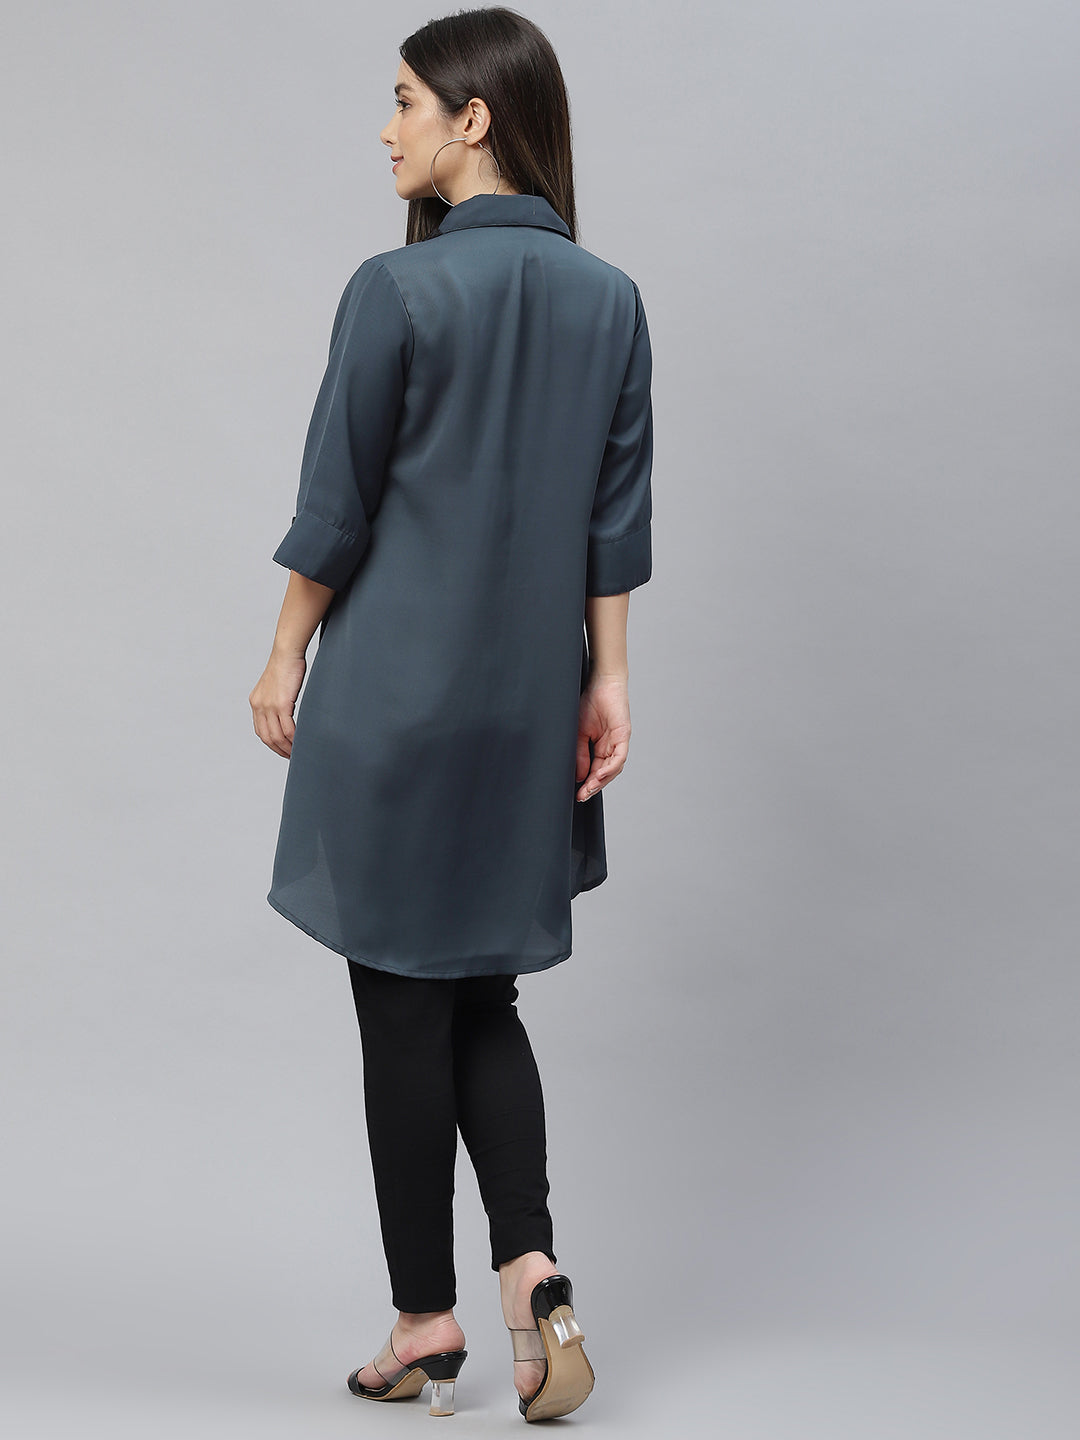 Cottinfab Charcoal Grey Shirt Style Longline Top